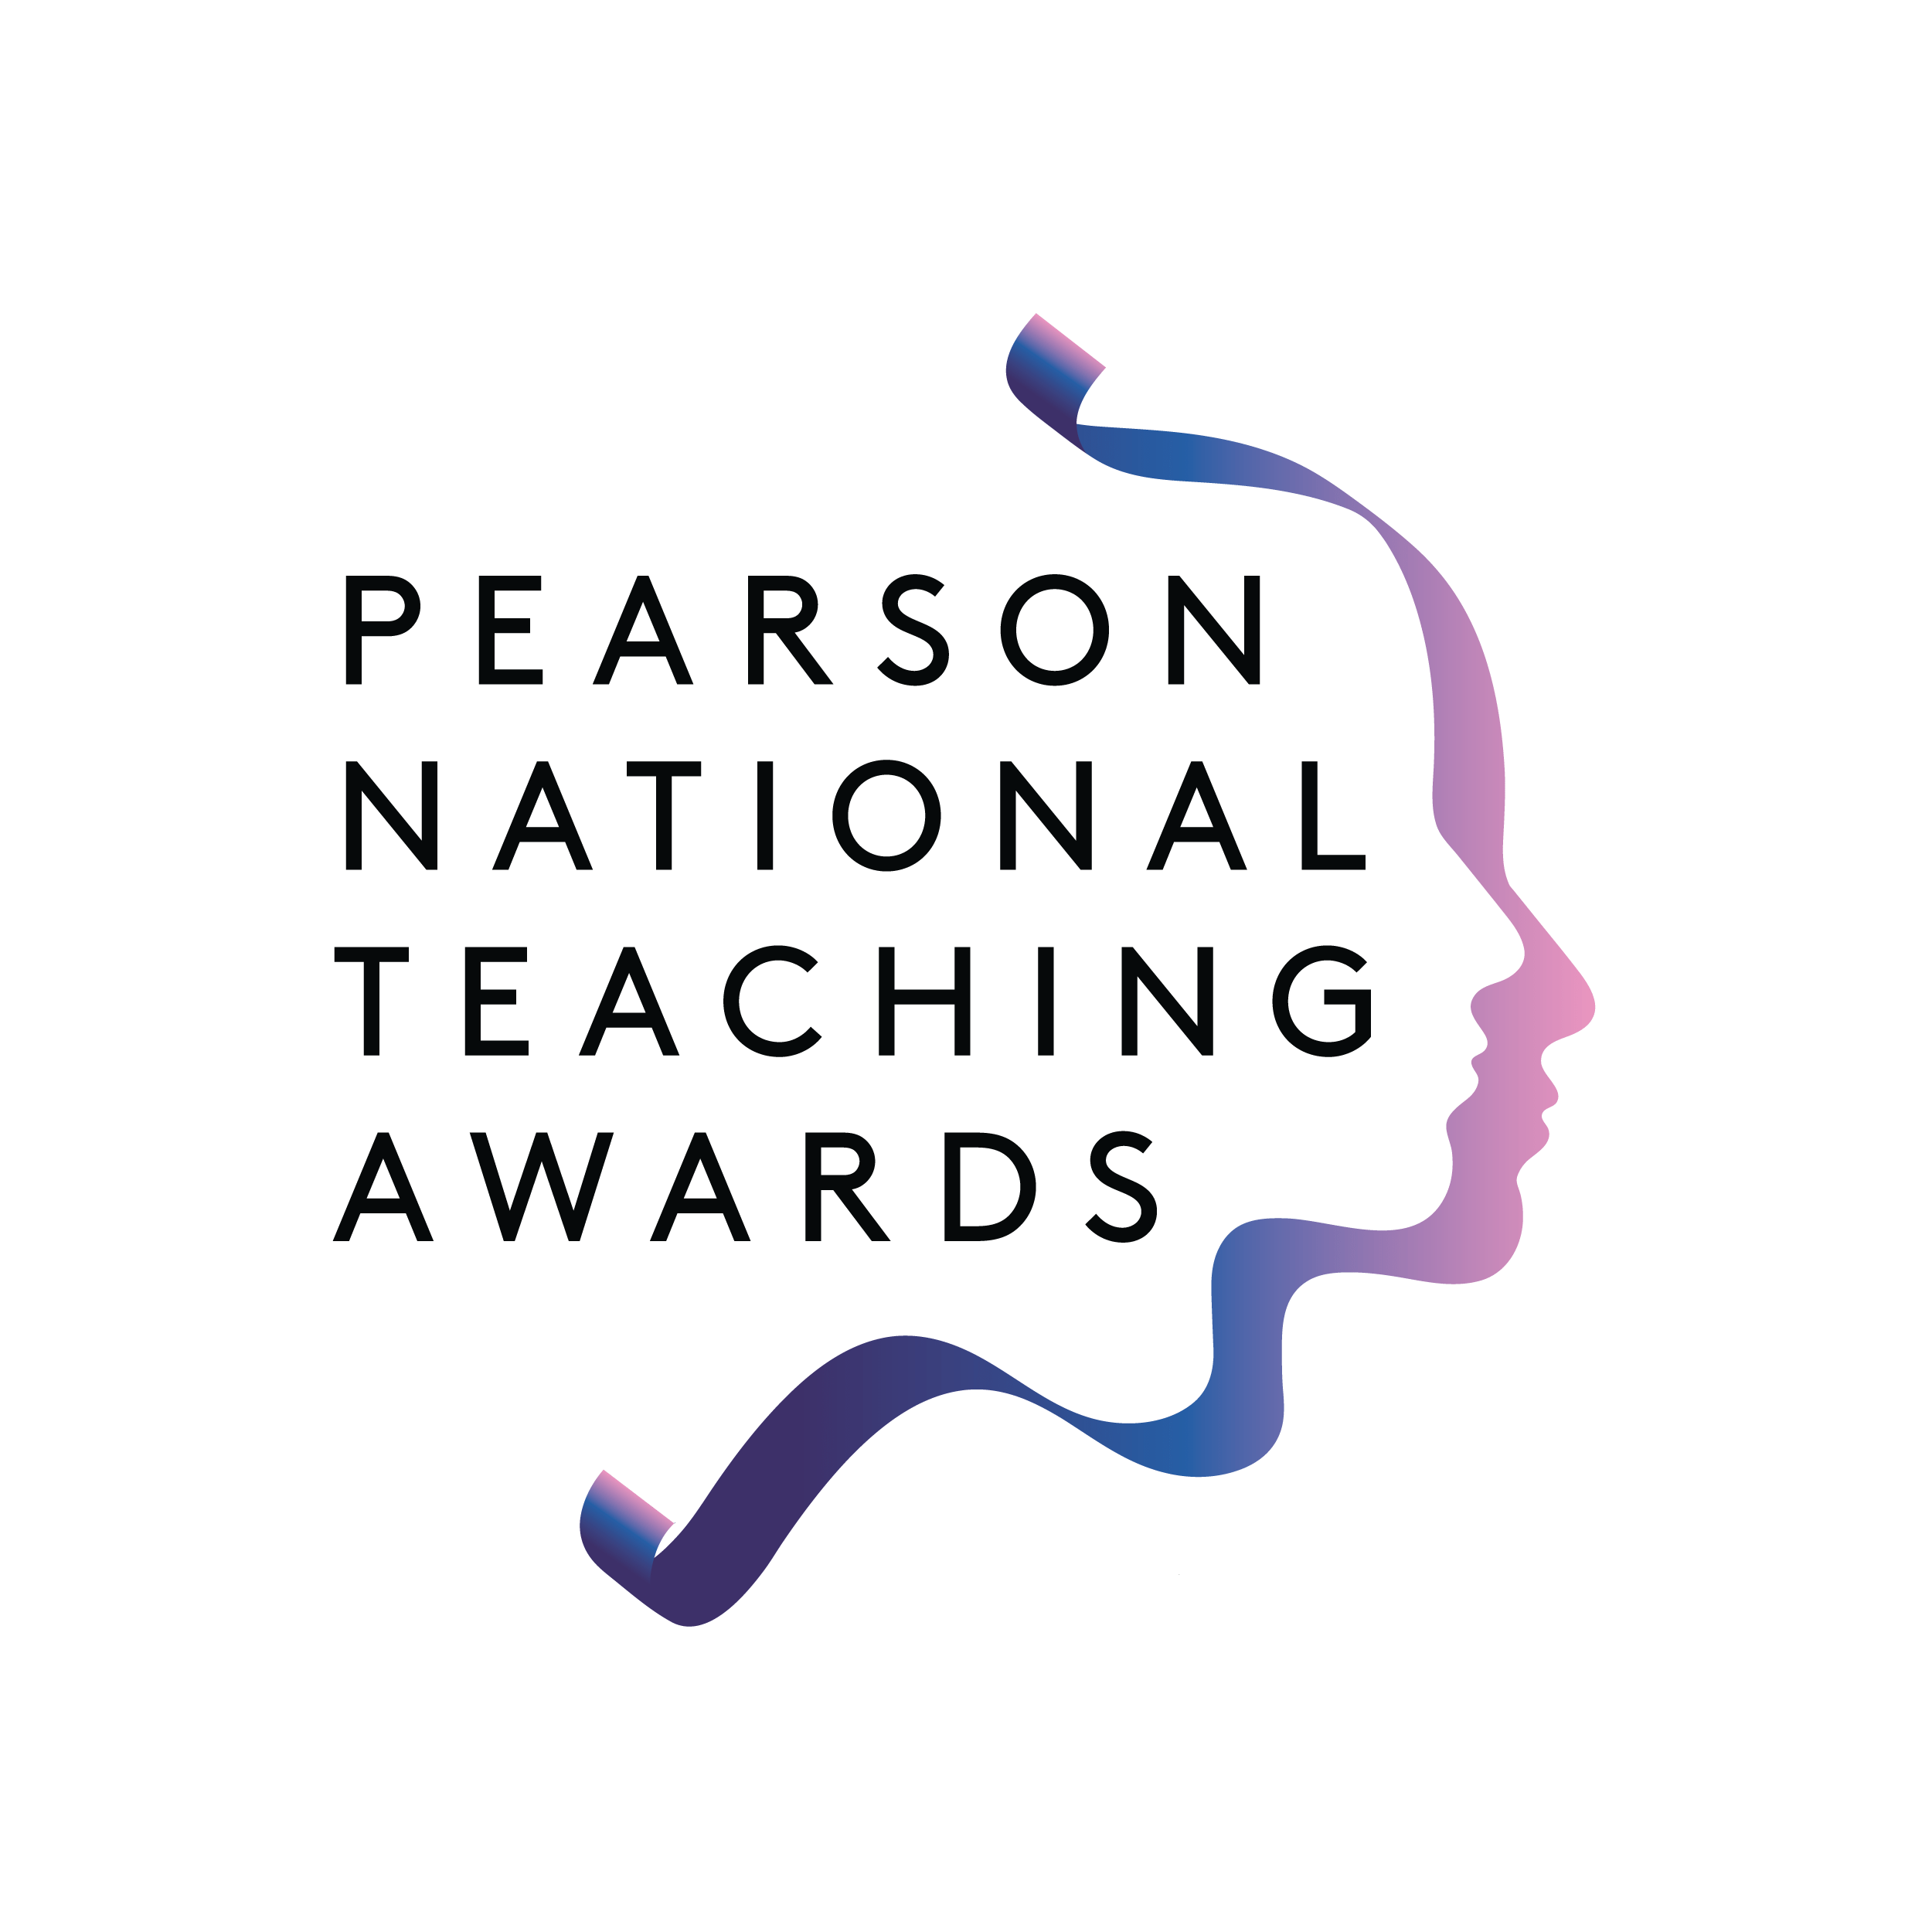 Nord Anglia sponsors Pearson National Teaching Awards in the UK - Nord Anglia sponsors Pearson National Teaching Awards in the UK